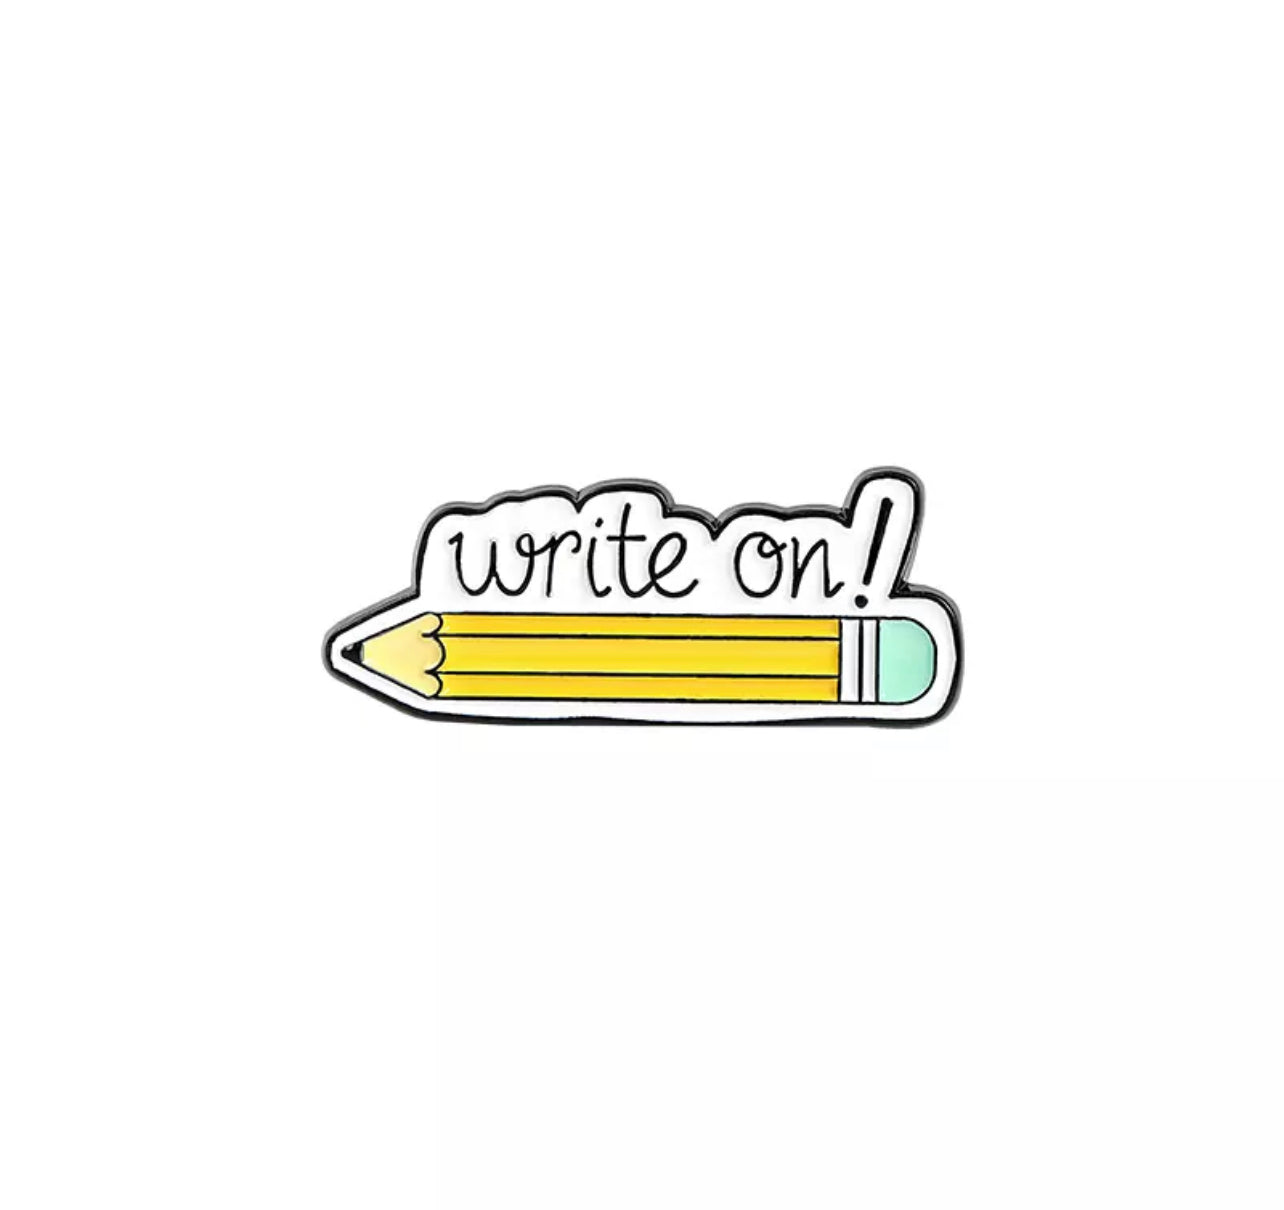 Write on!